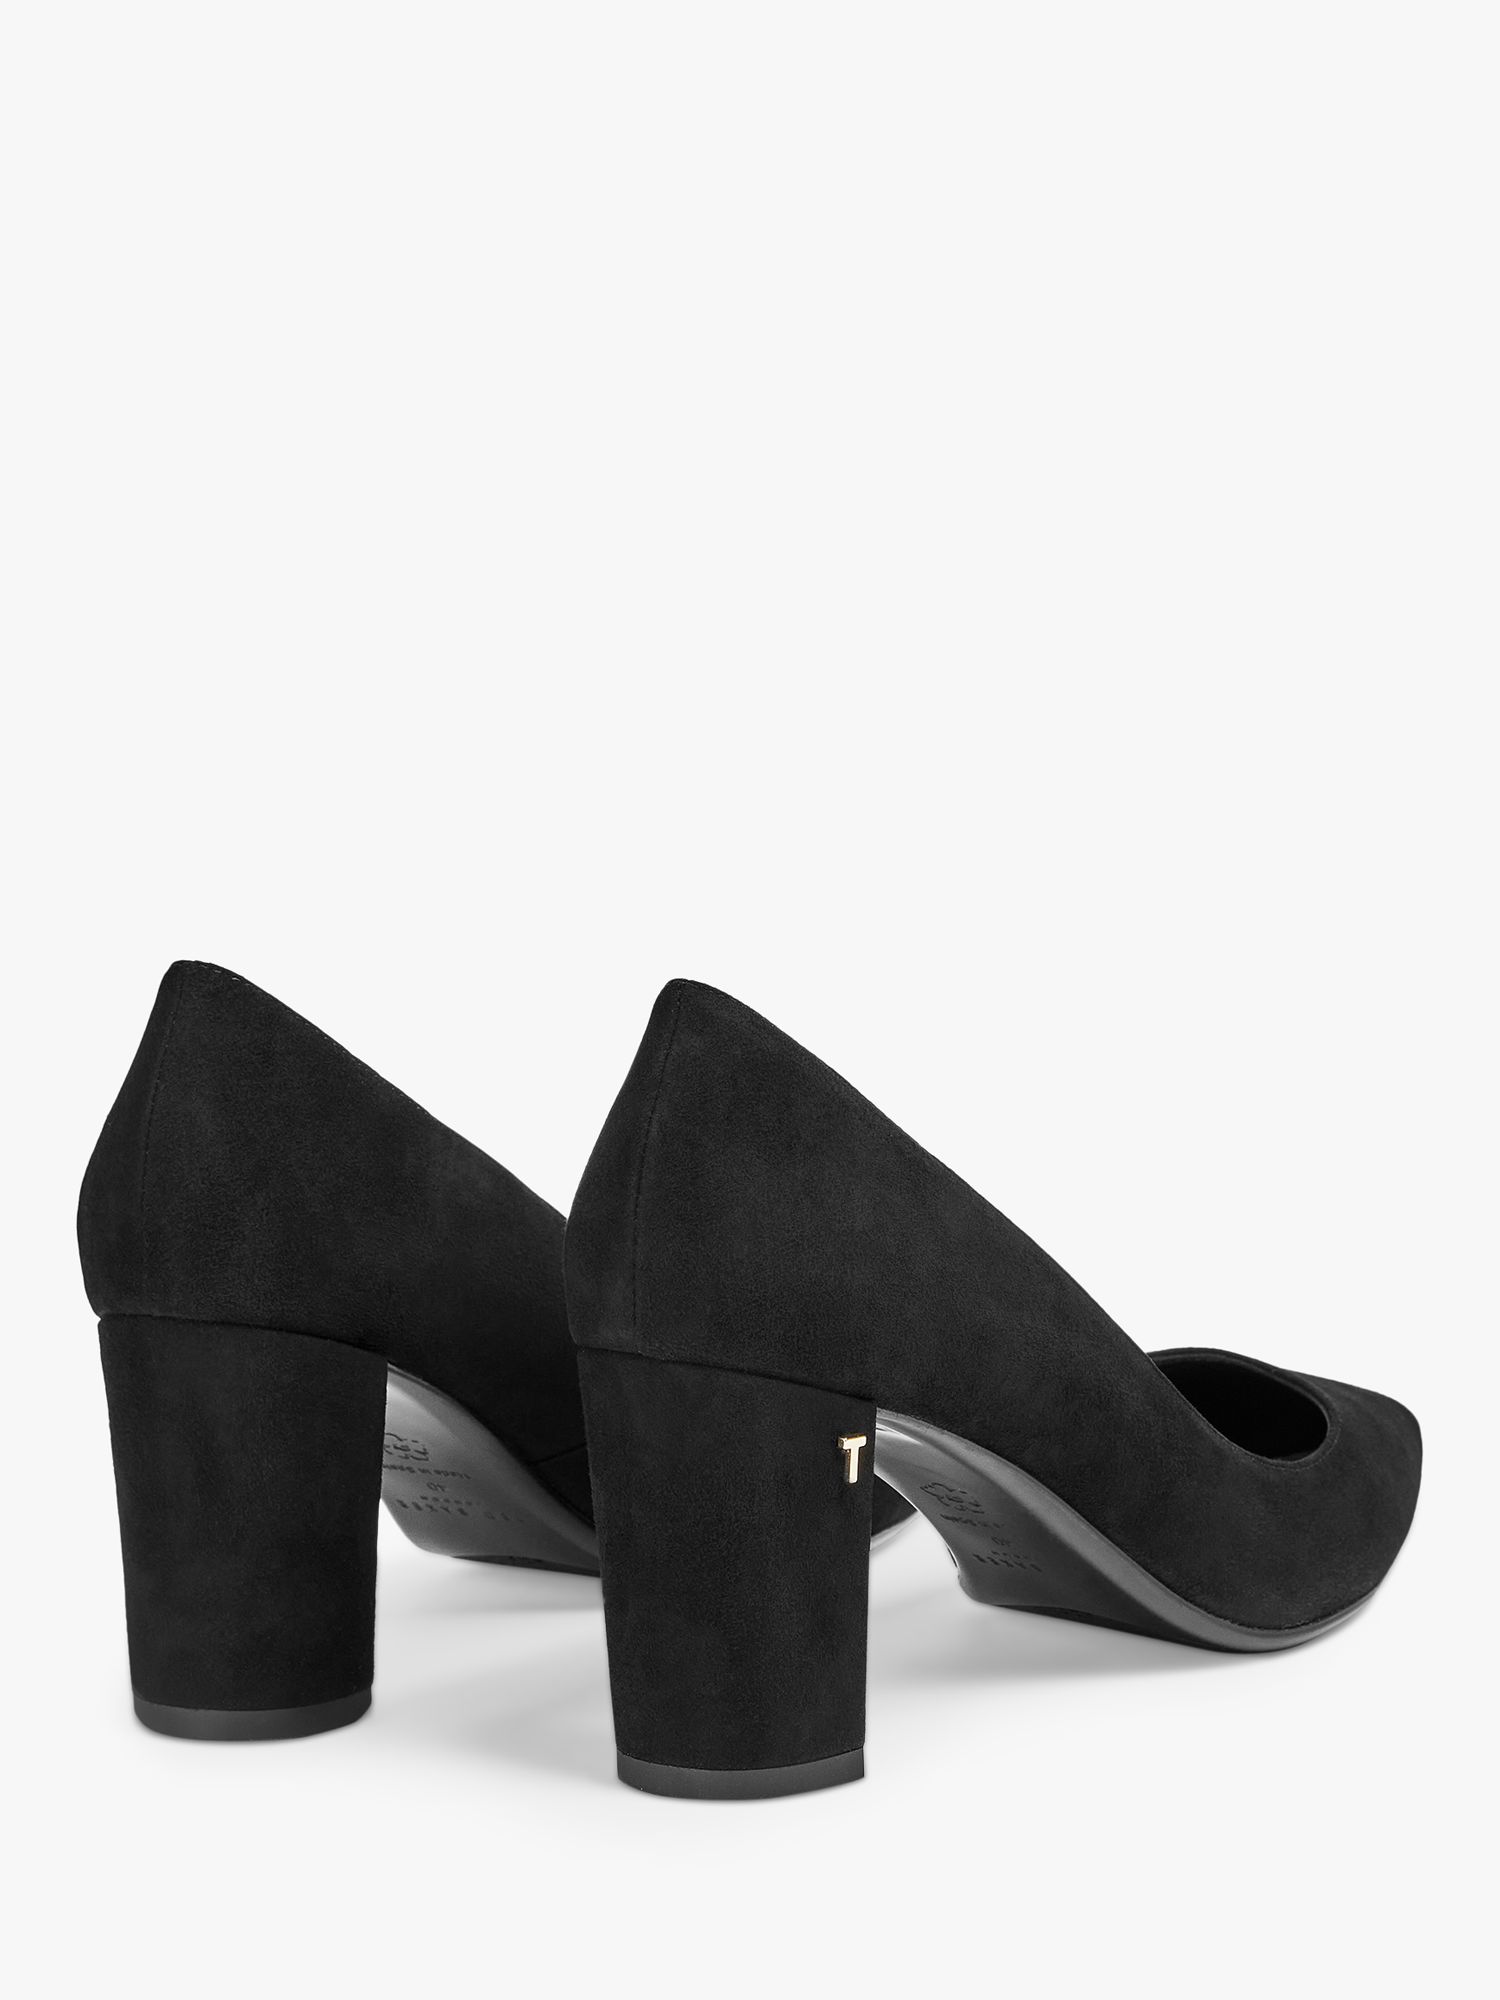 Ted Baker Savana Block Heel Suede Court Shoes, Black at John Lewis & Partners